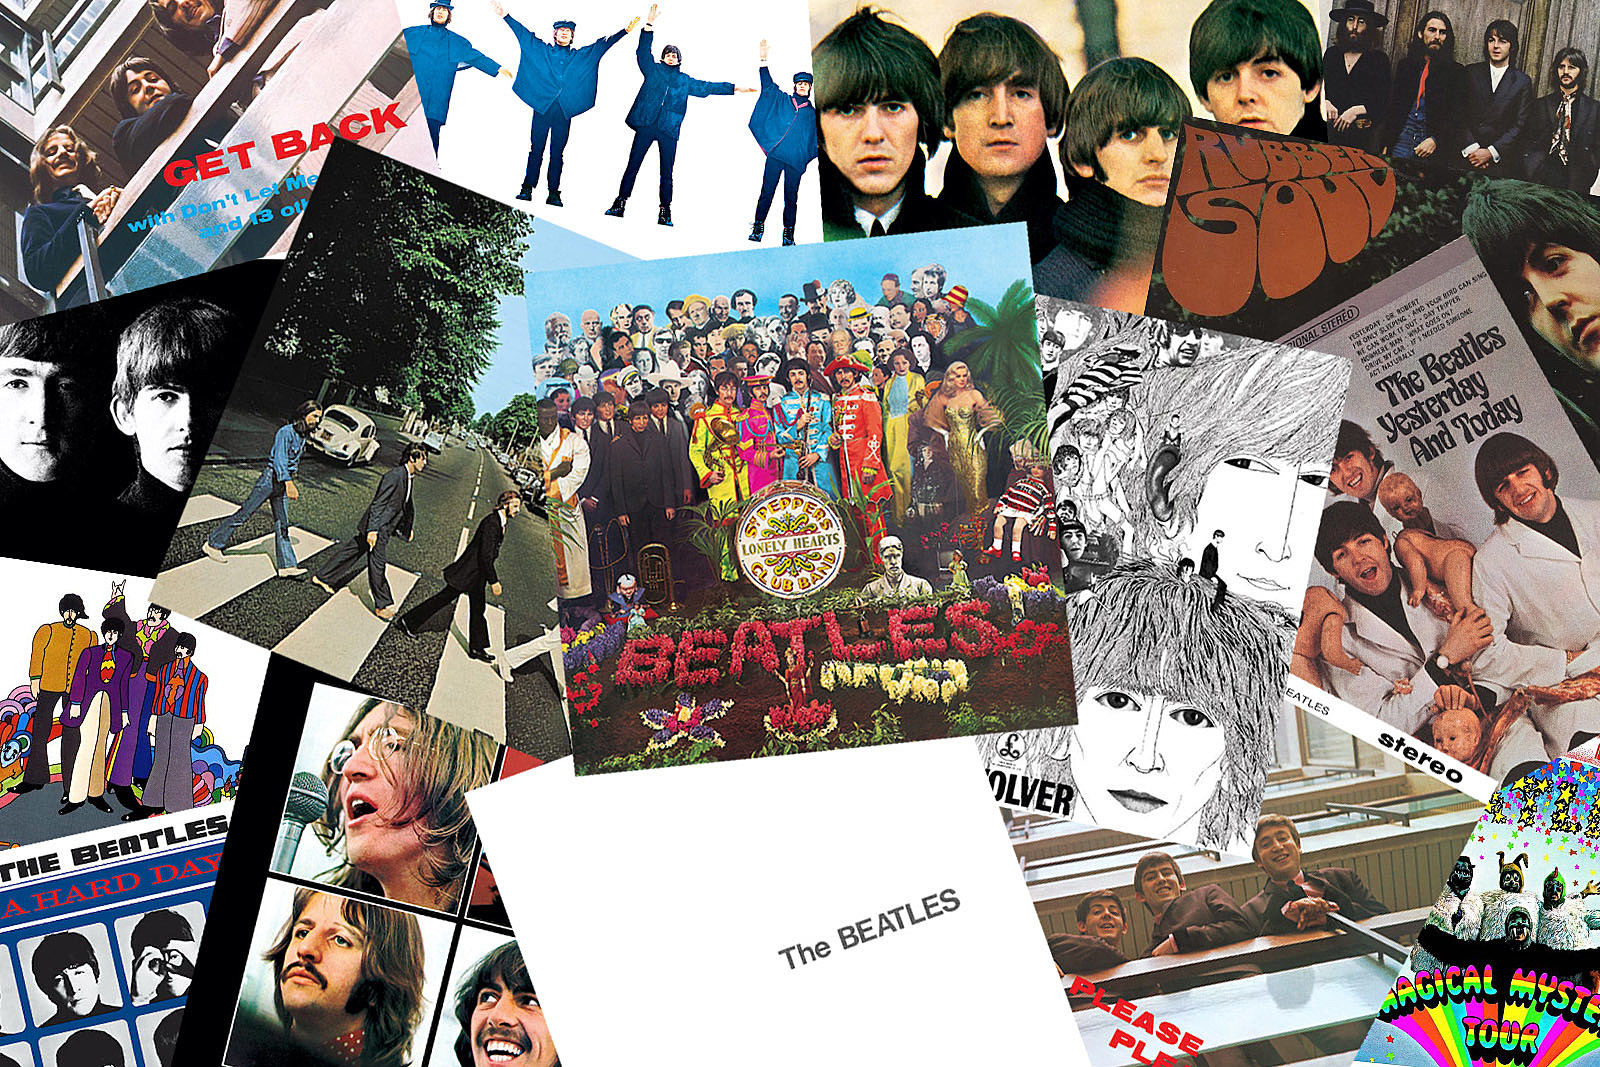 Beatles Albums